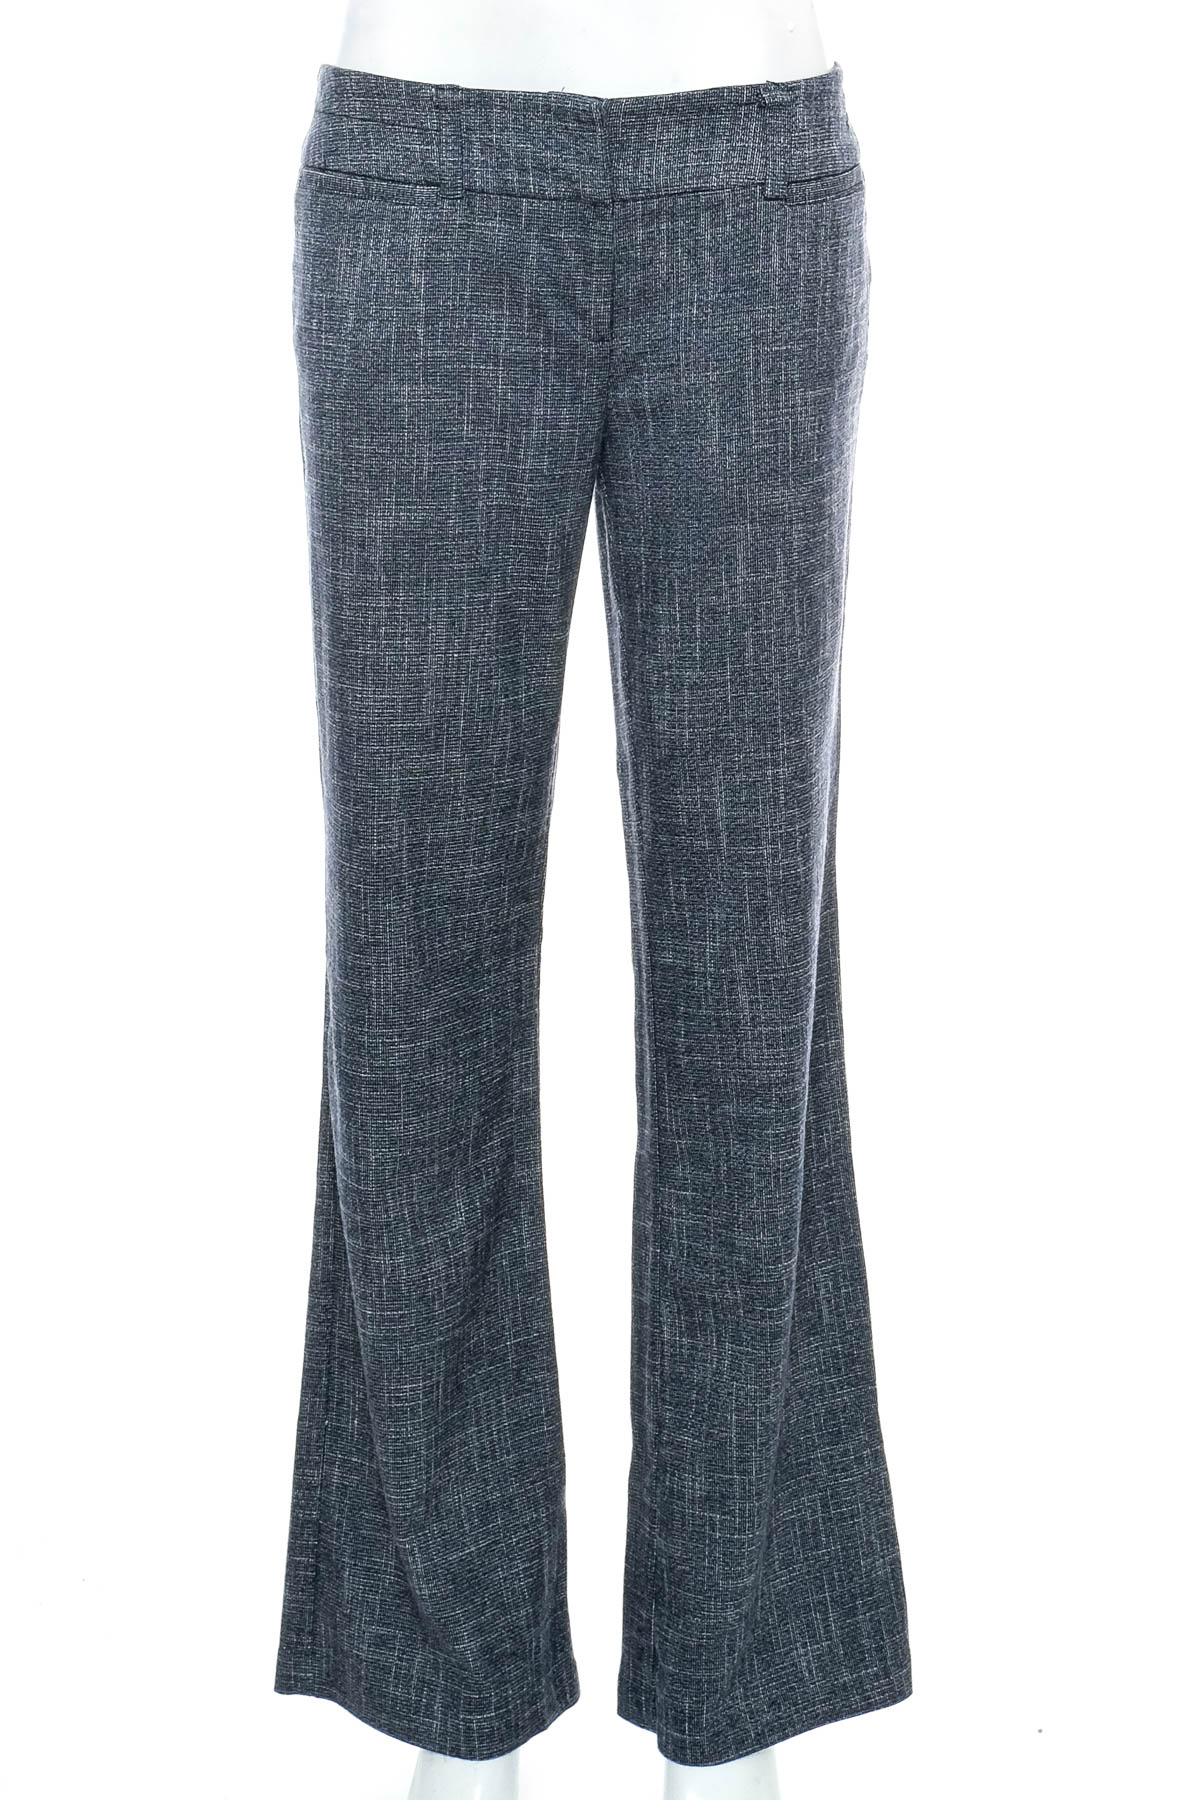 Women's trousers - New York & Company - 0